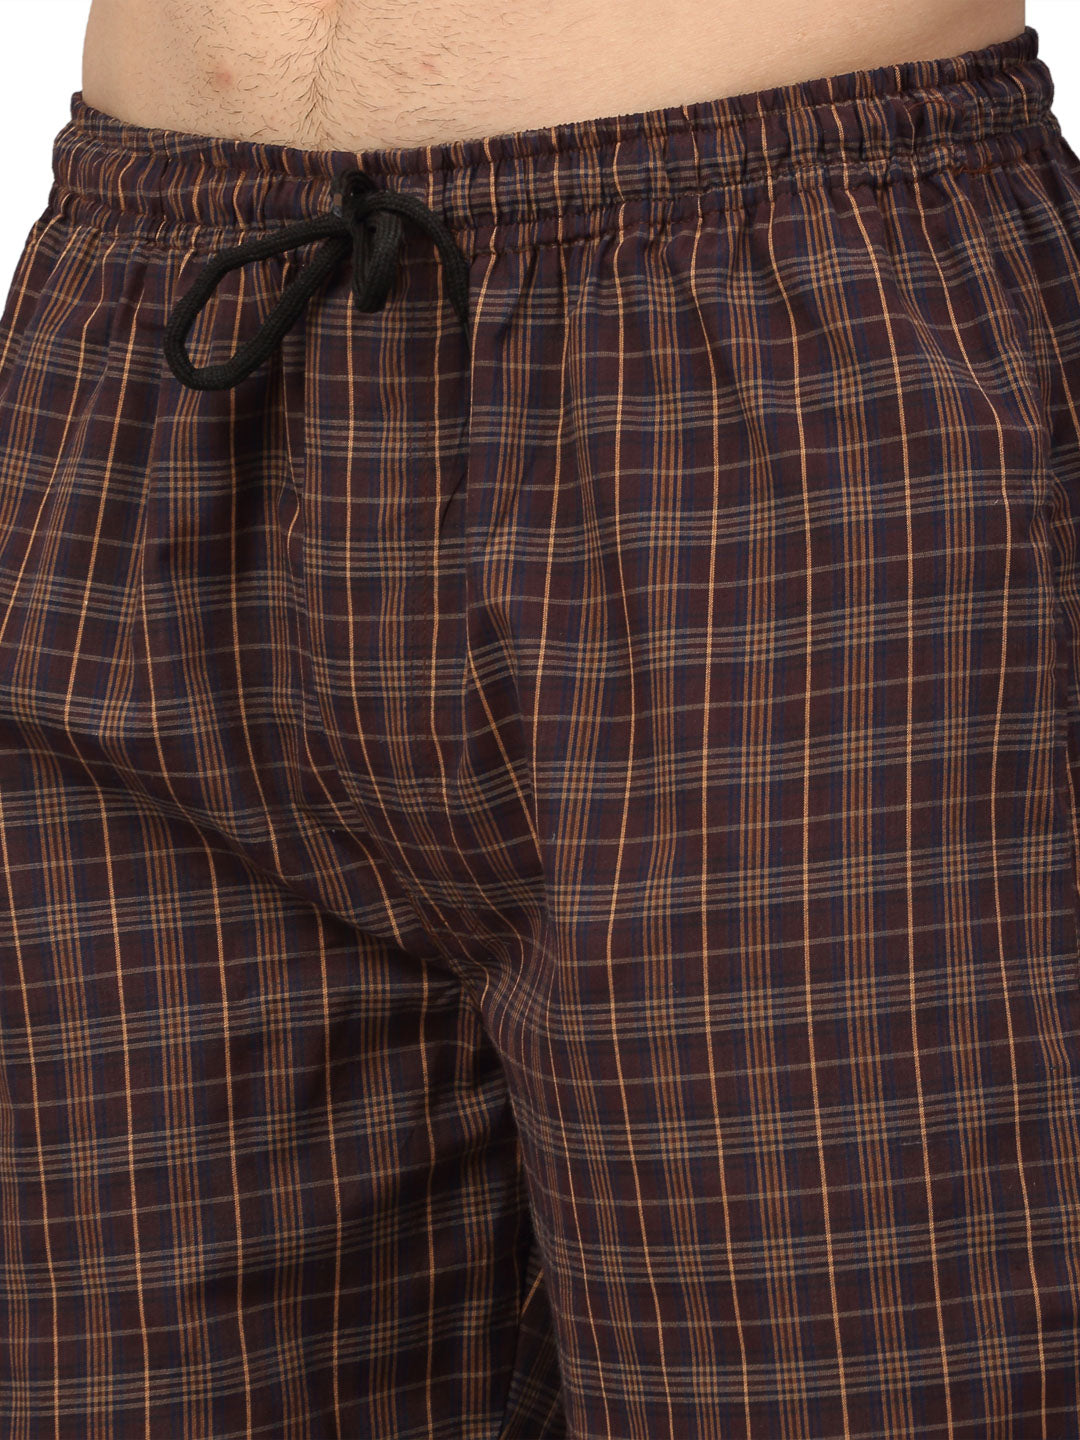 Jainish Men's Brown Cotton Checked Track Pants